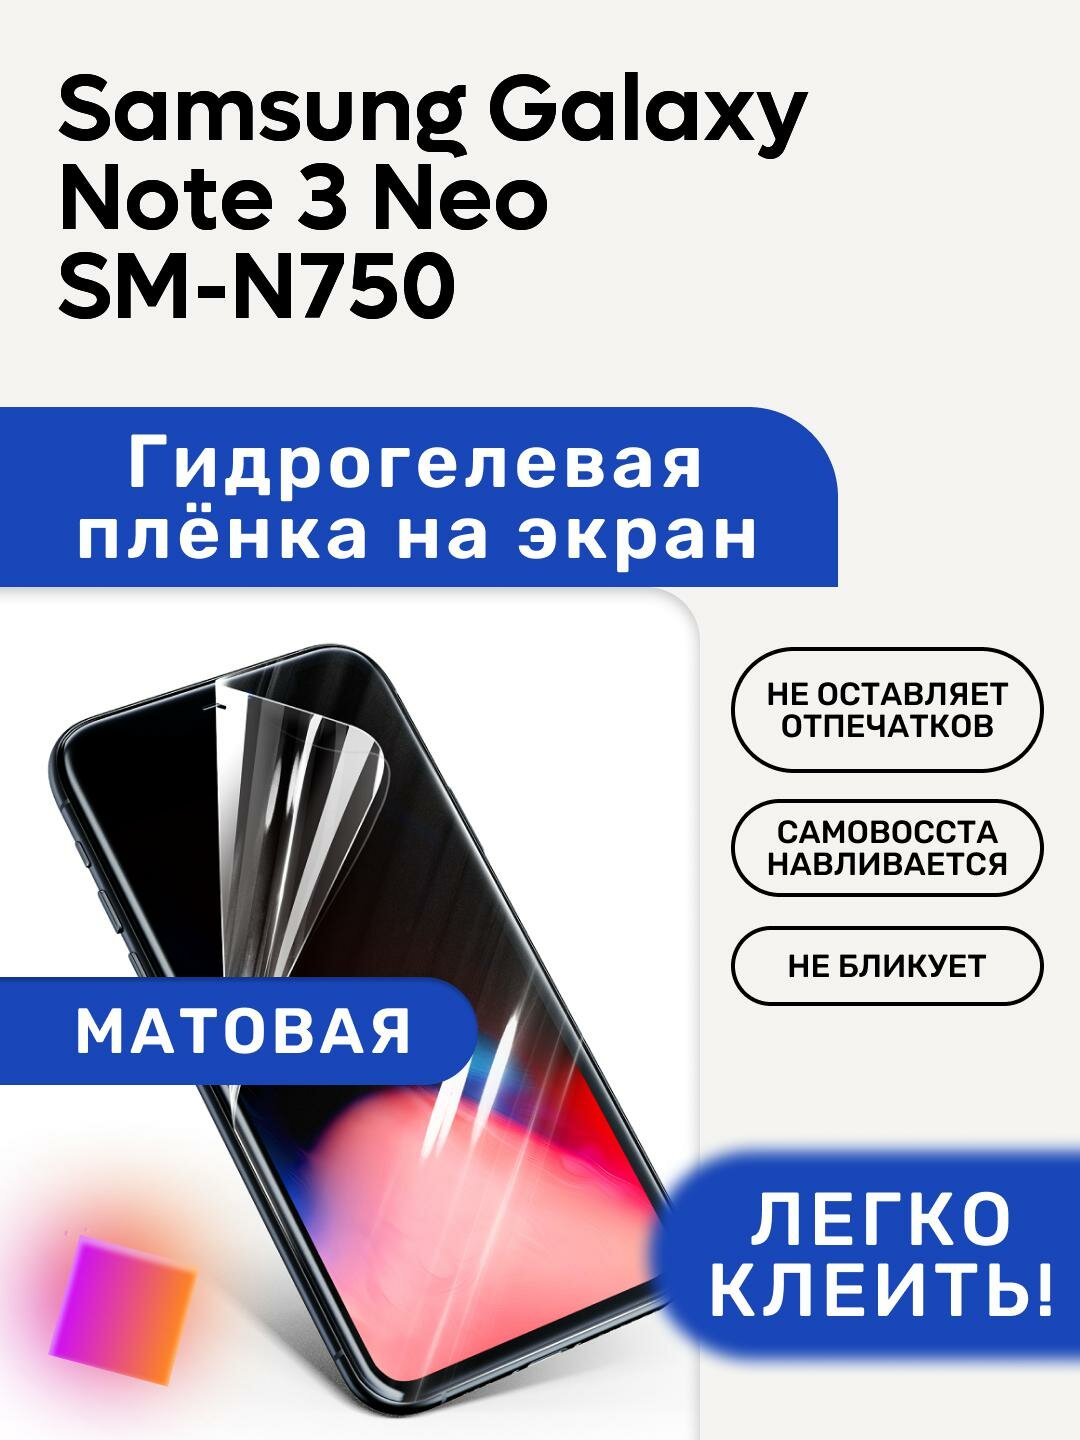 Матовая Гидрогелевая плёнка, полиуретановая, защита экрана Samsung Galaxy Note 3 Neo SM-N750